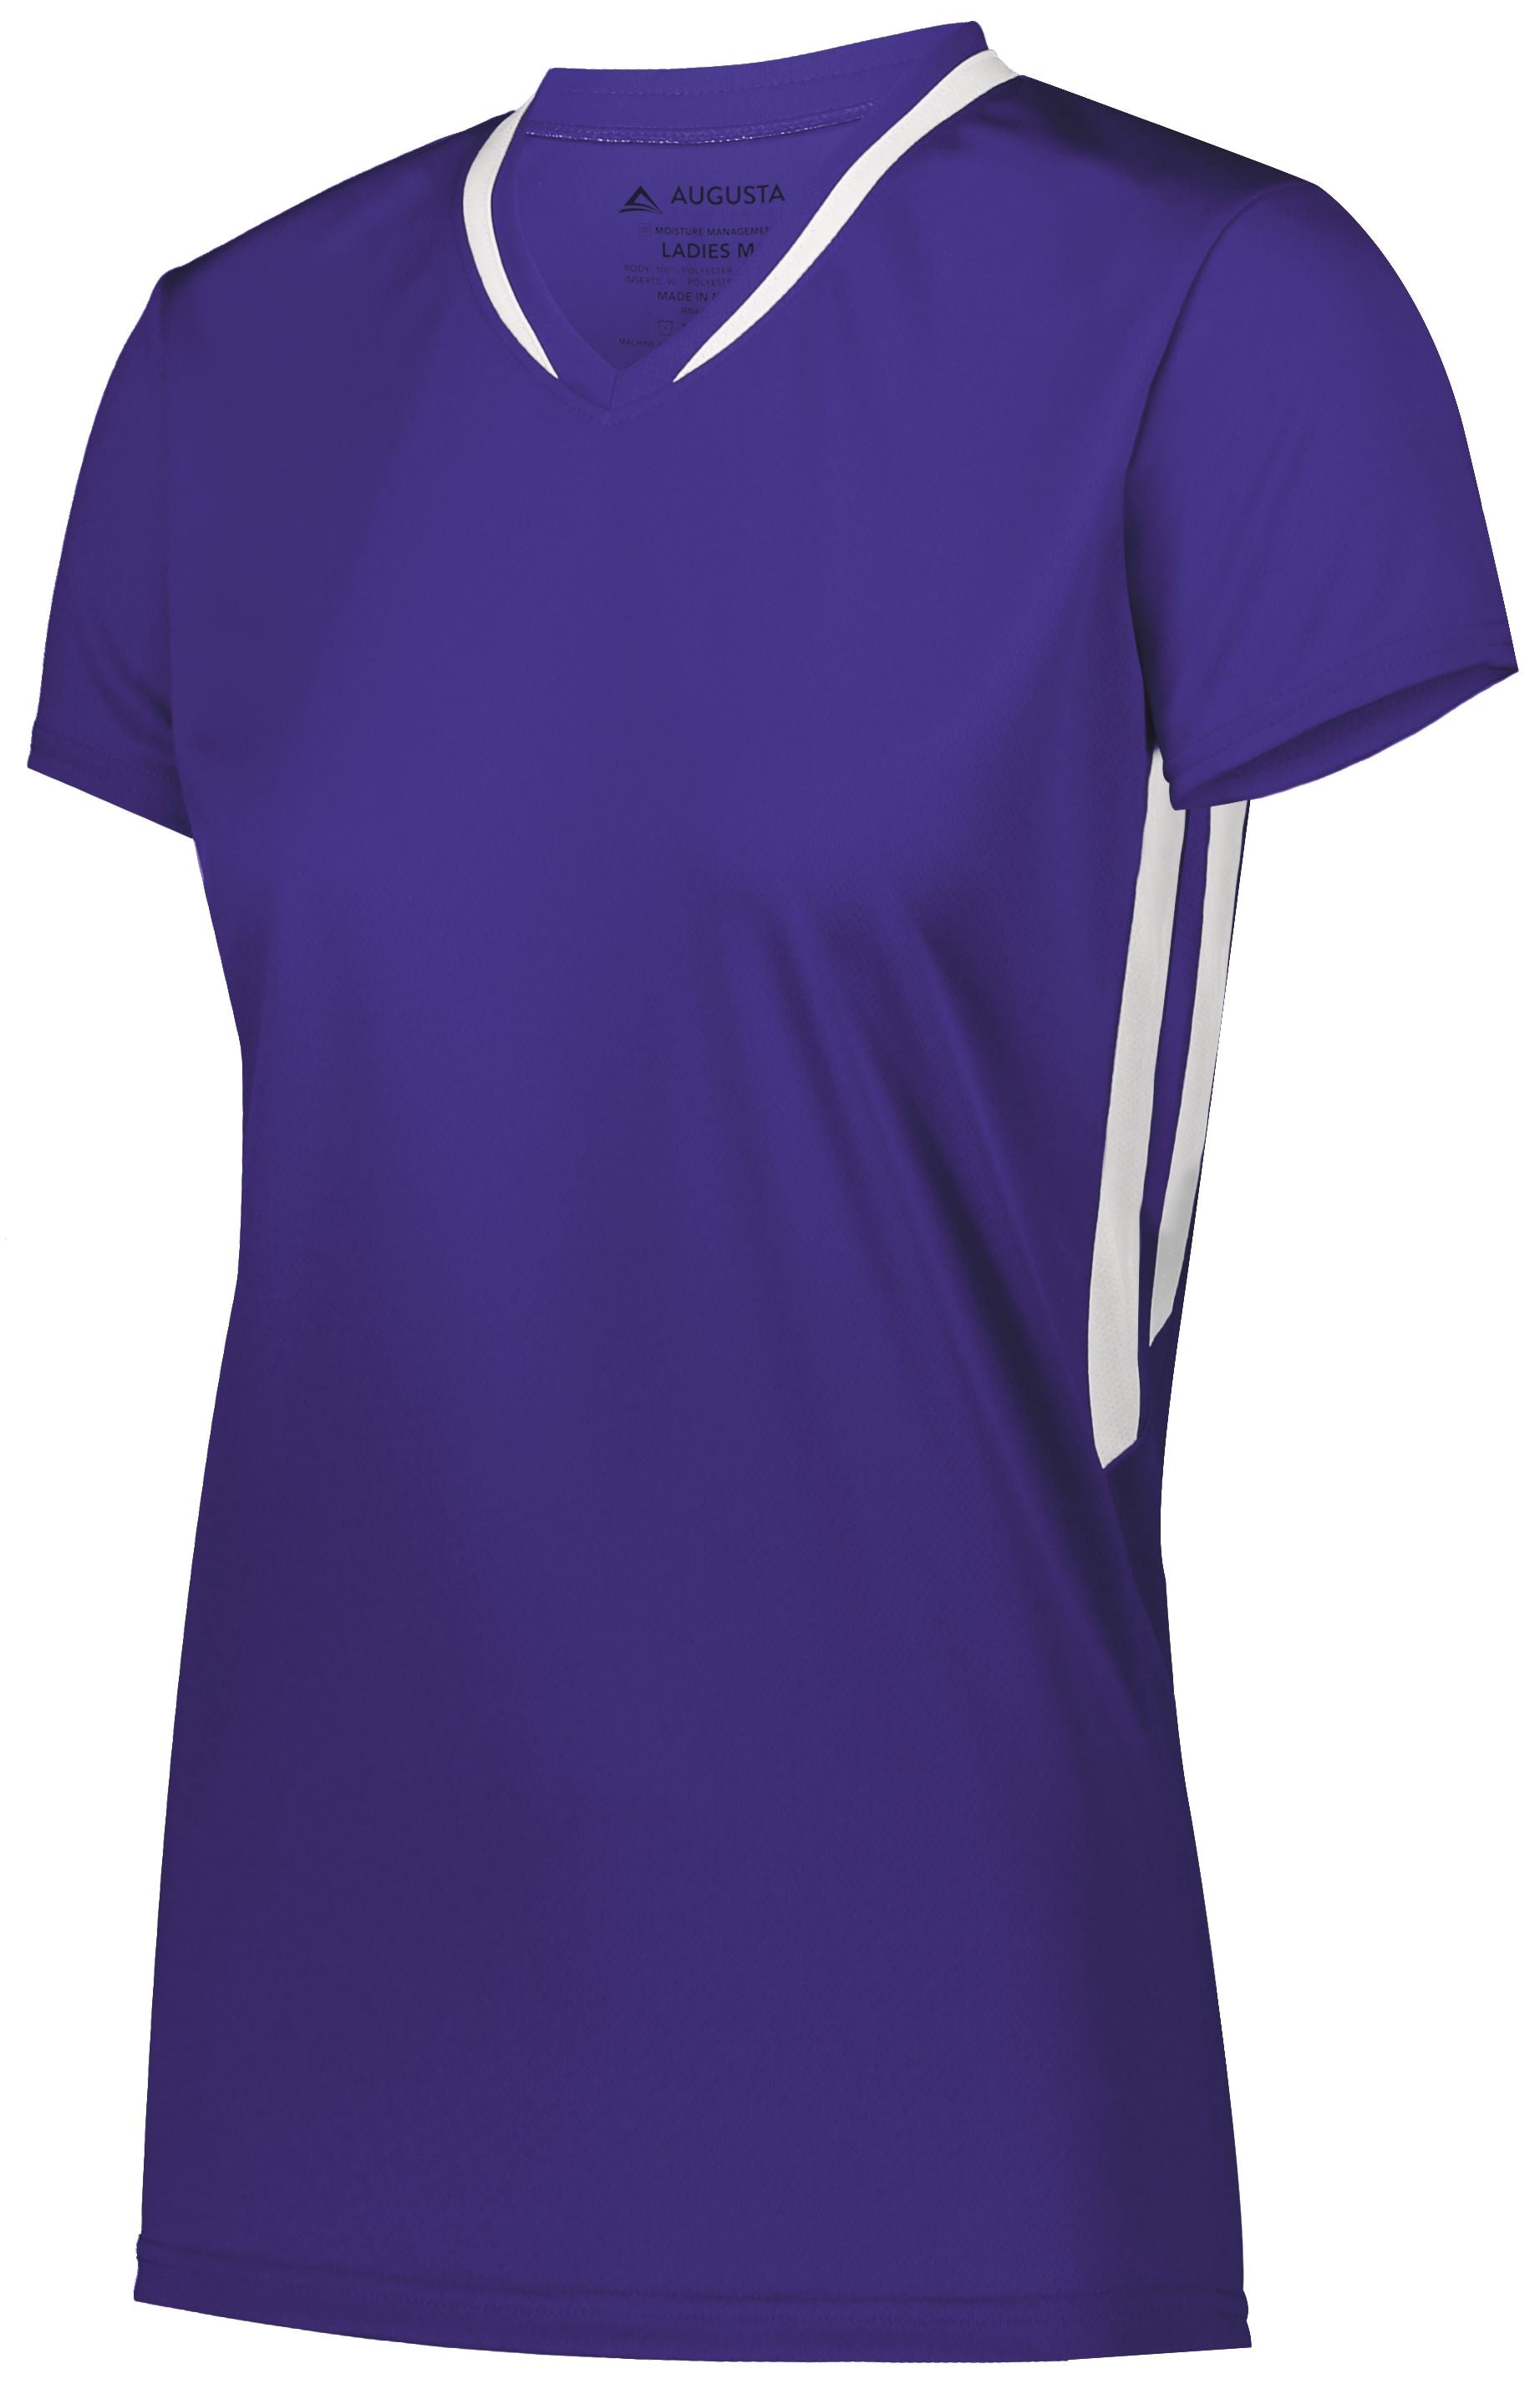 Augusta Sportswear Ladies Full Force Short Sleeve Jersey in Purple/White  -Part of the Ladies, Ladies-Jersey, Augusta-Products, Lacrosse, Shirts, All-Sports, All-Sports-1 product lines at KanaleyCreations.com